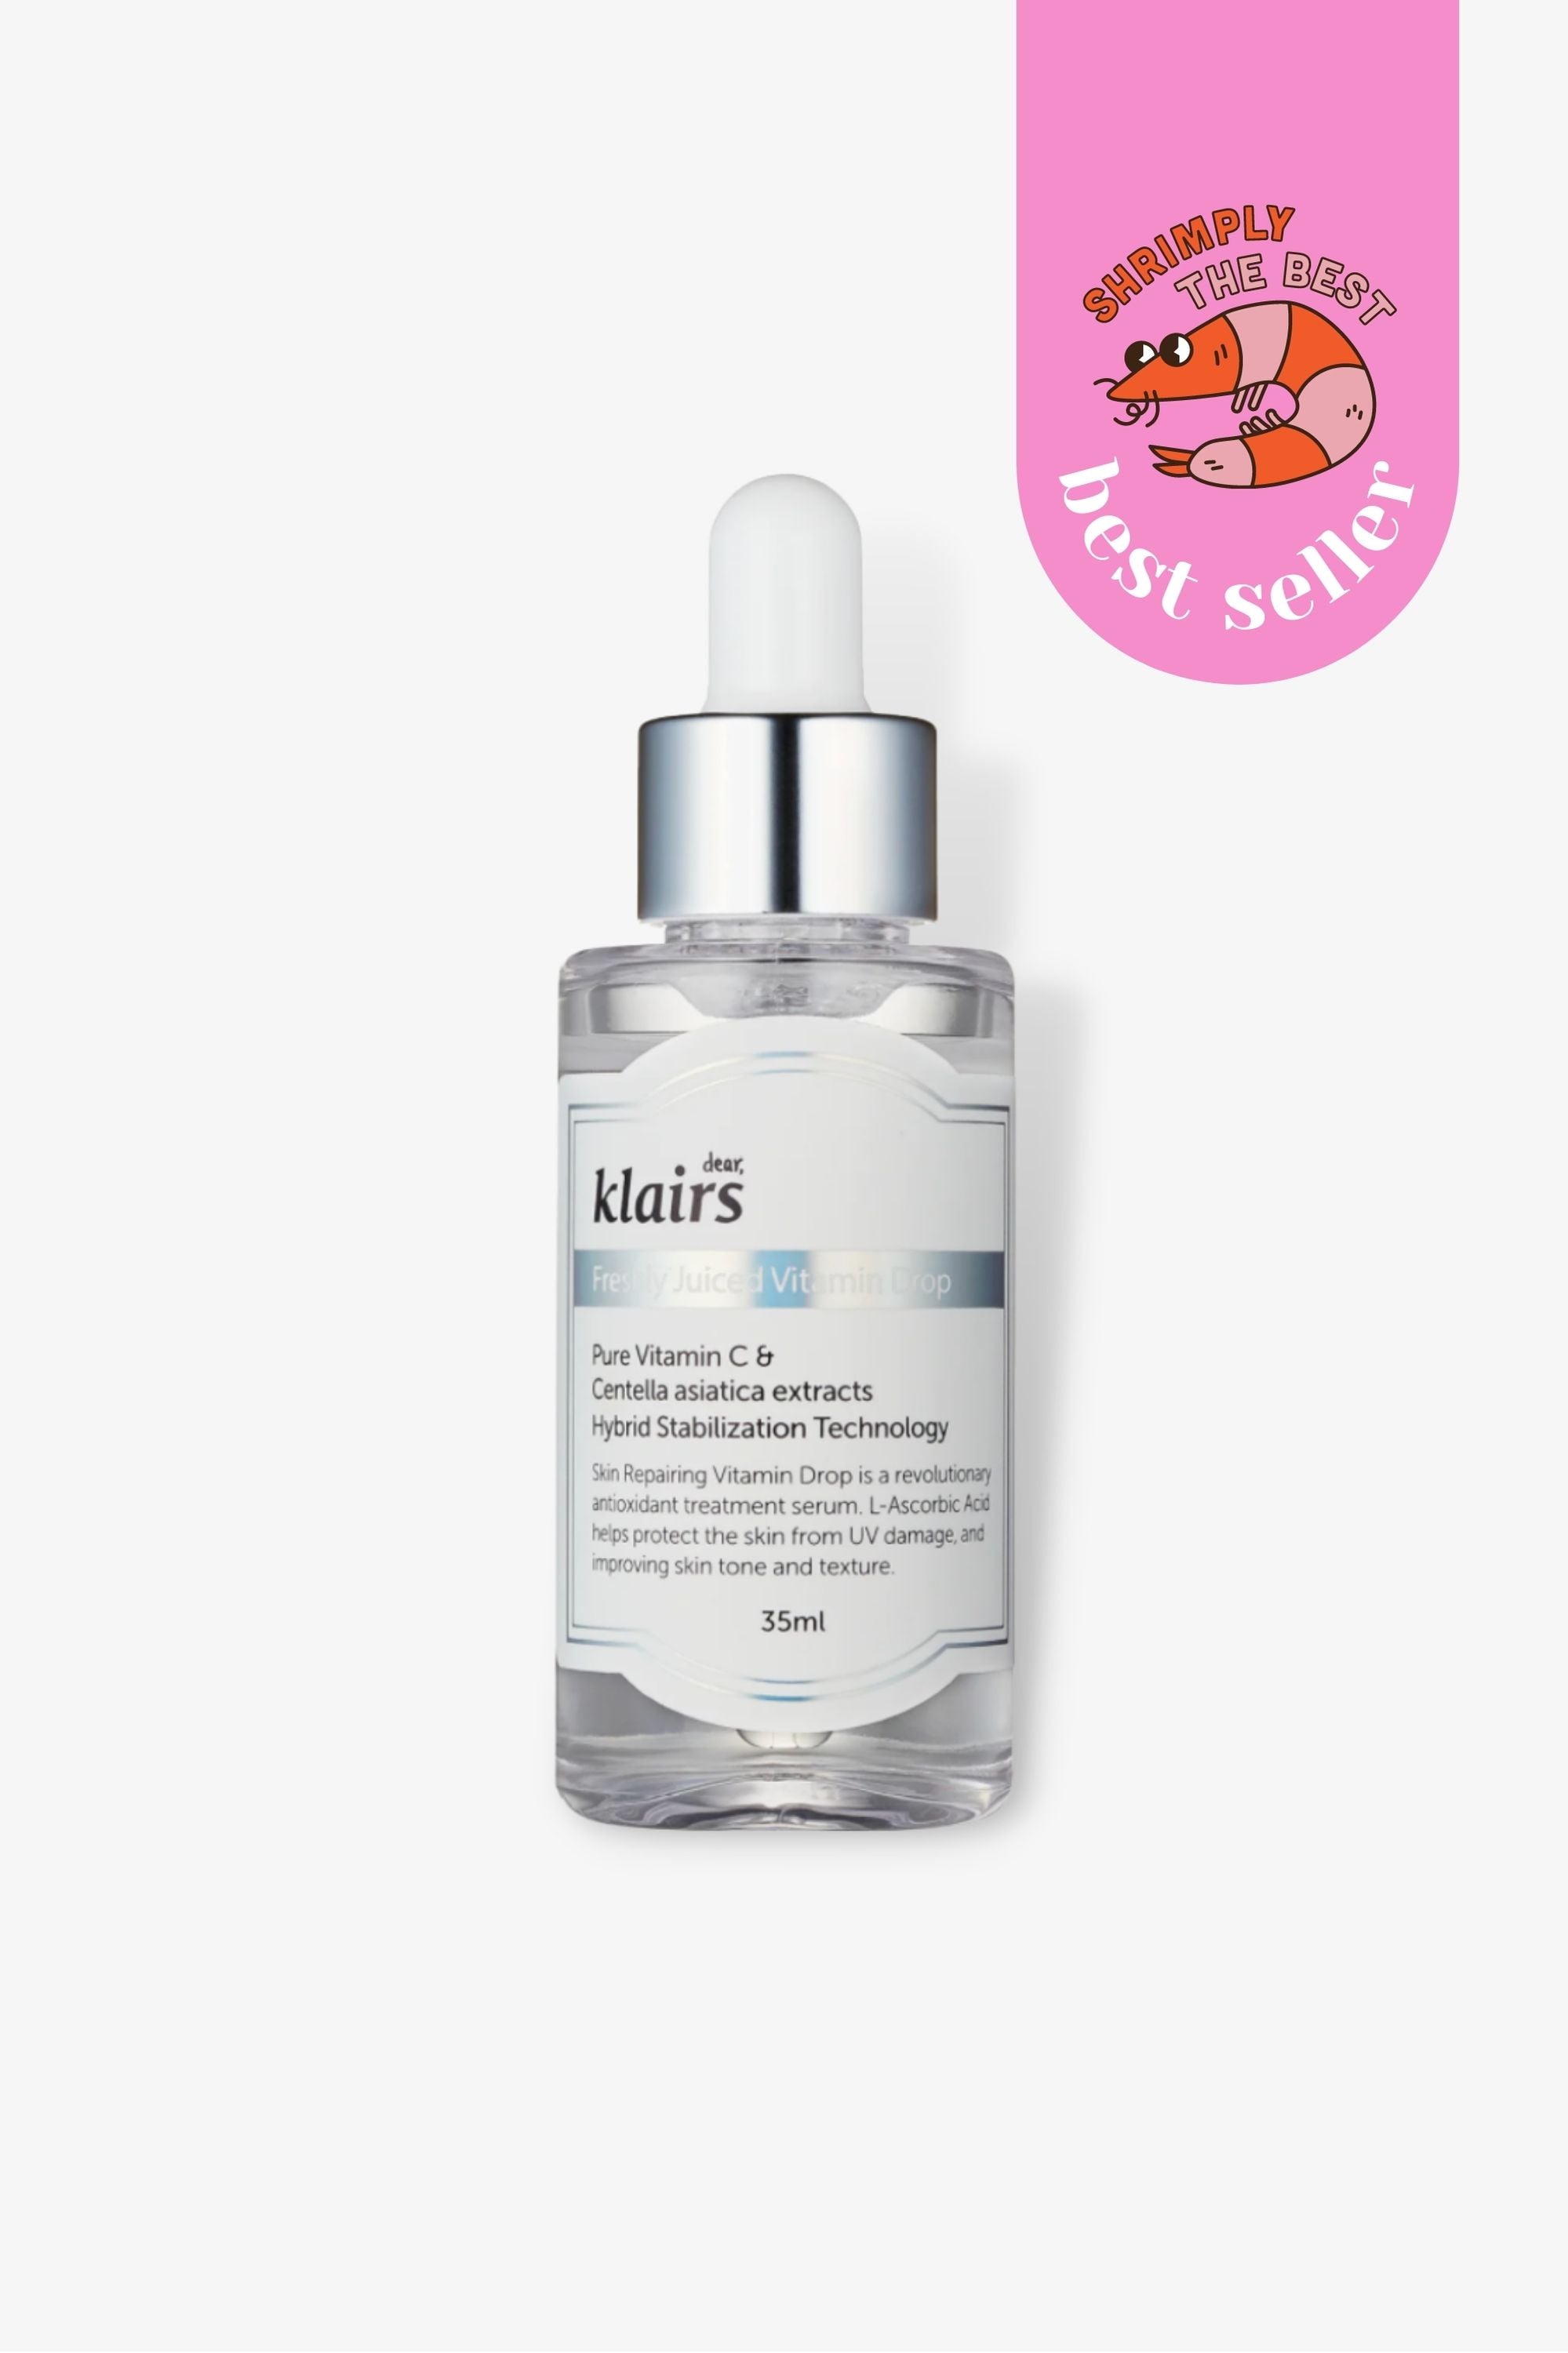 Dear, Klairs - Freshly Juiced Vitamin Drop - 35ml